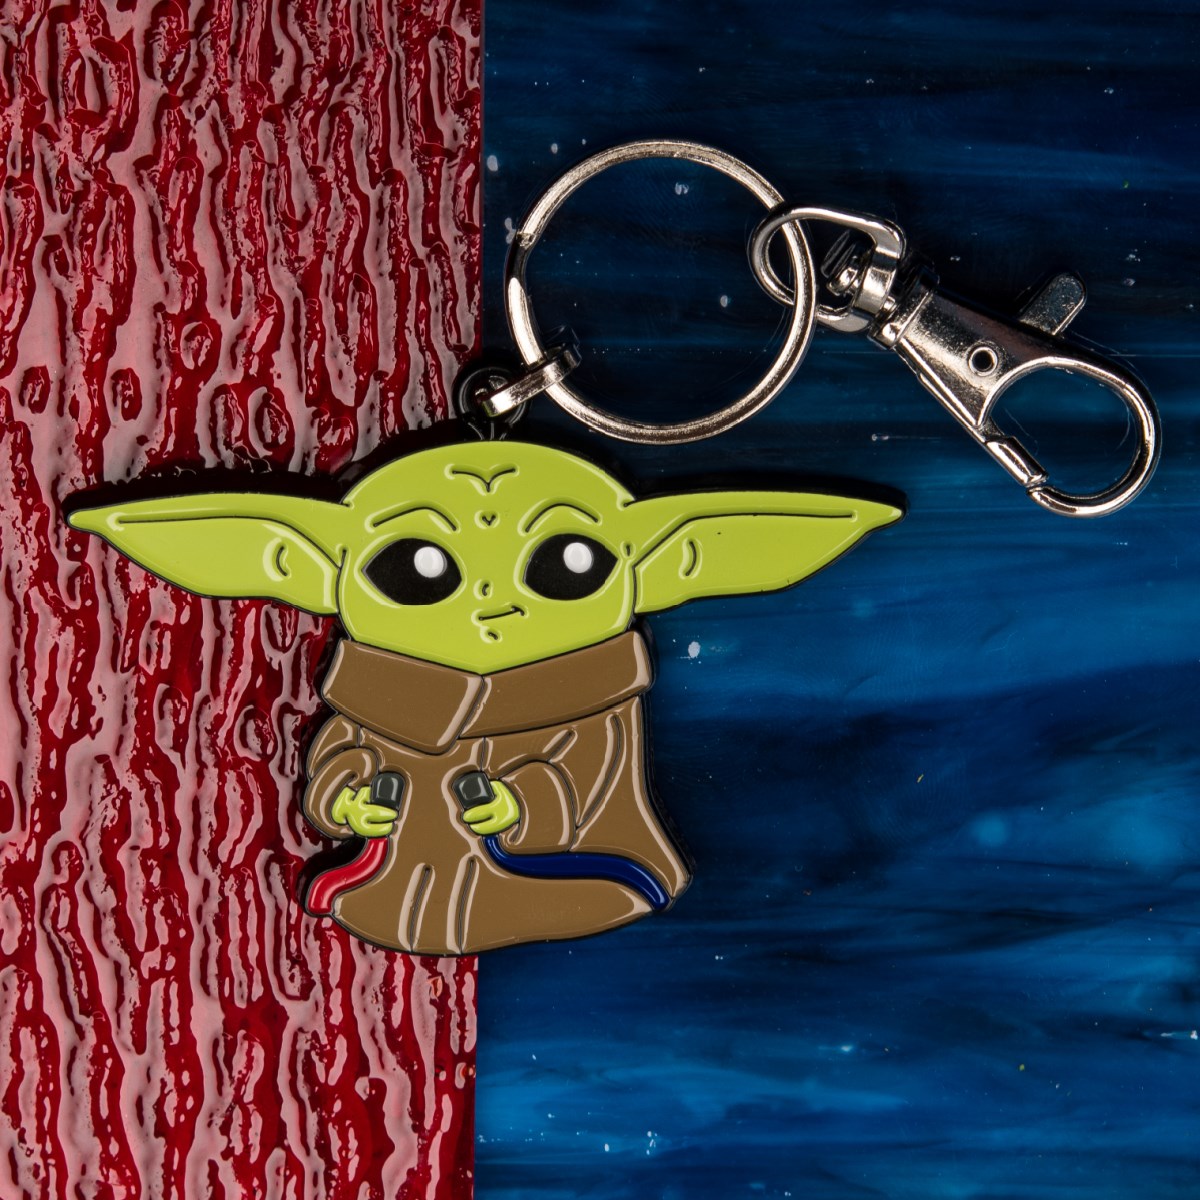 Star Wars: The Mandalorian Grogu (AKA: Baby Yoda/ The Child) with Wires Keychain